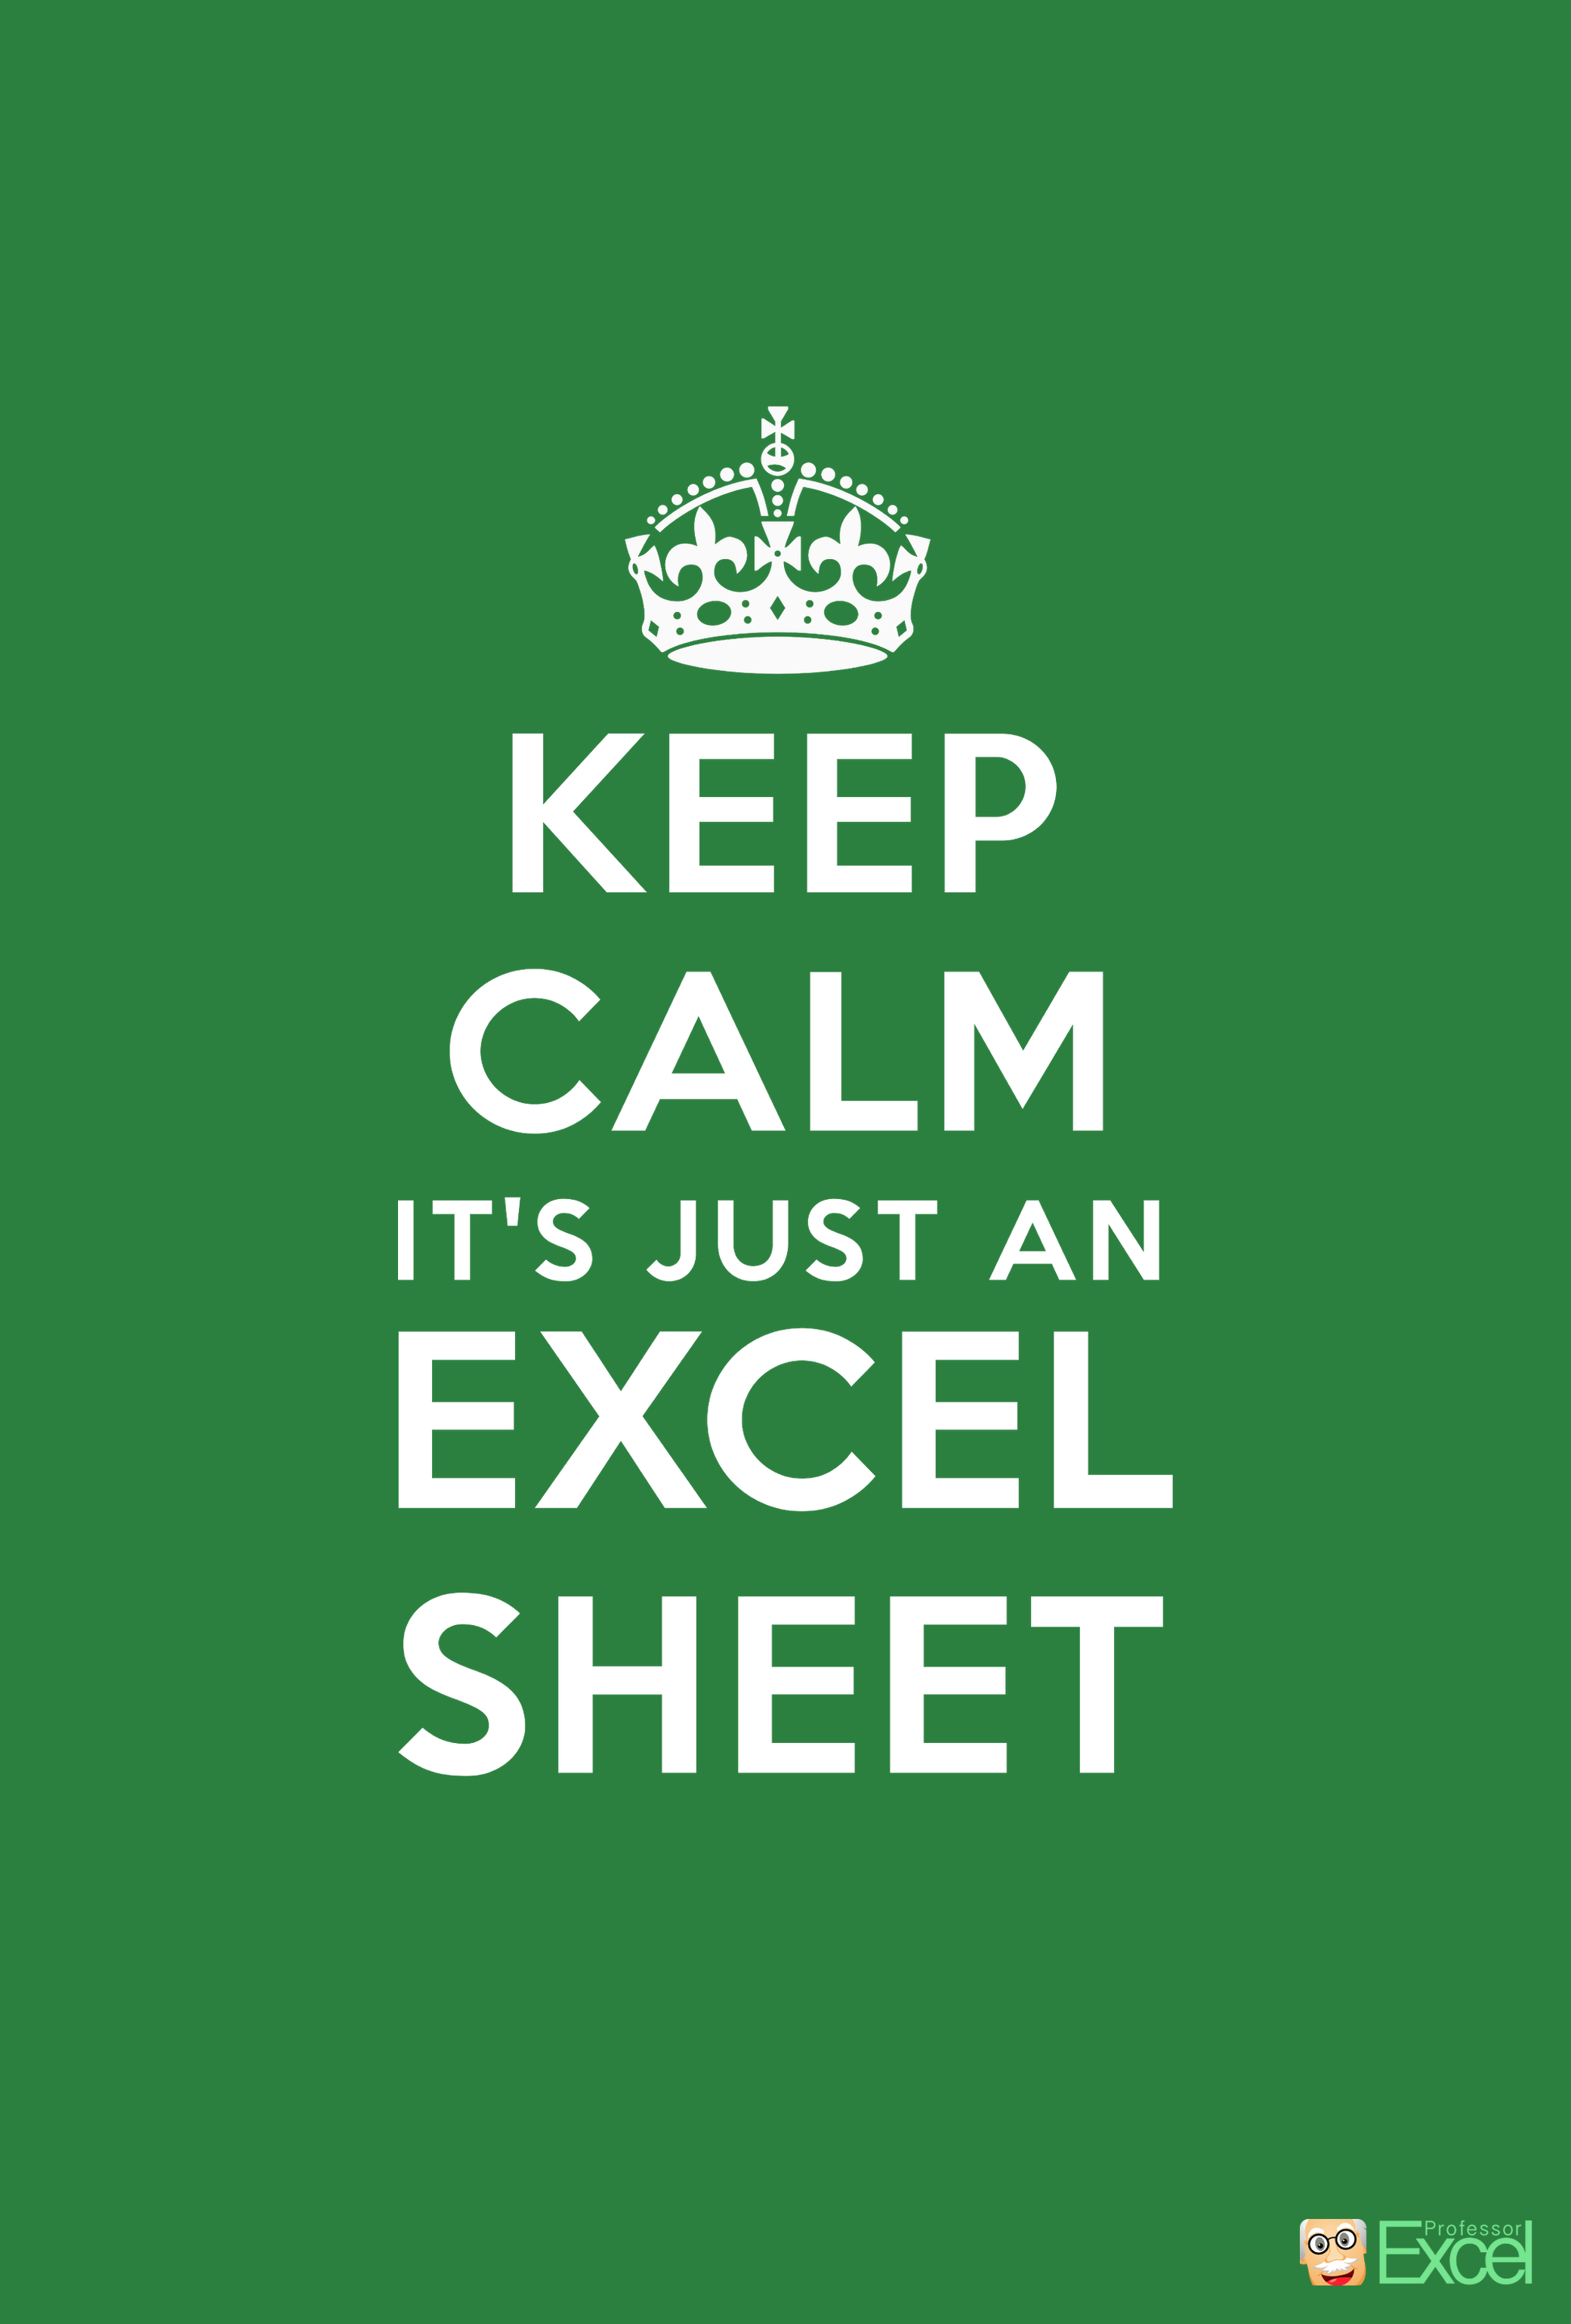 Wallpaper_Excel_Keep_Calm_3